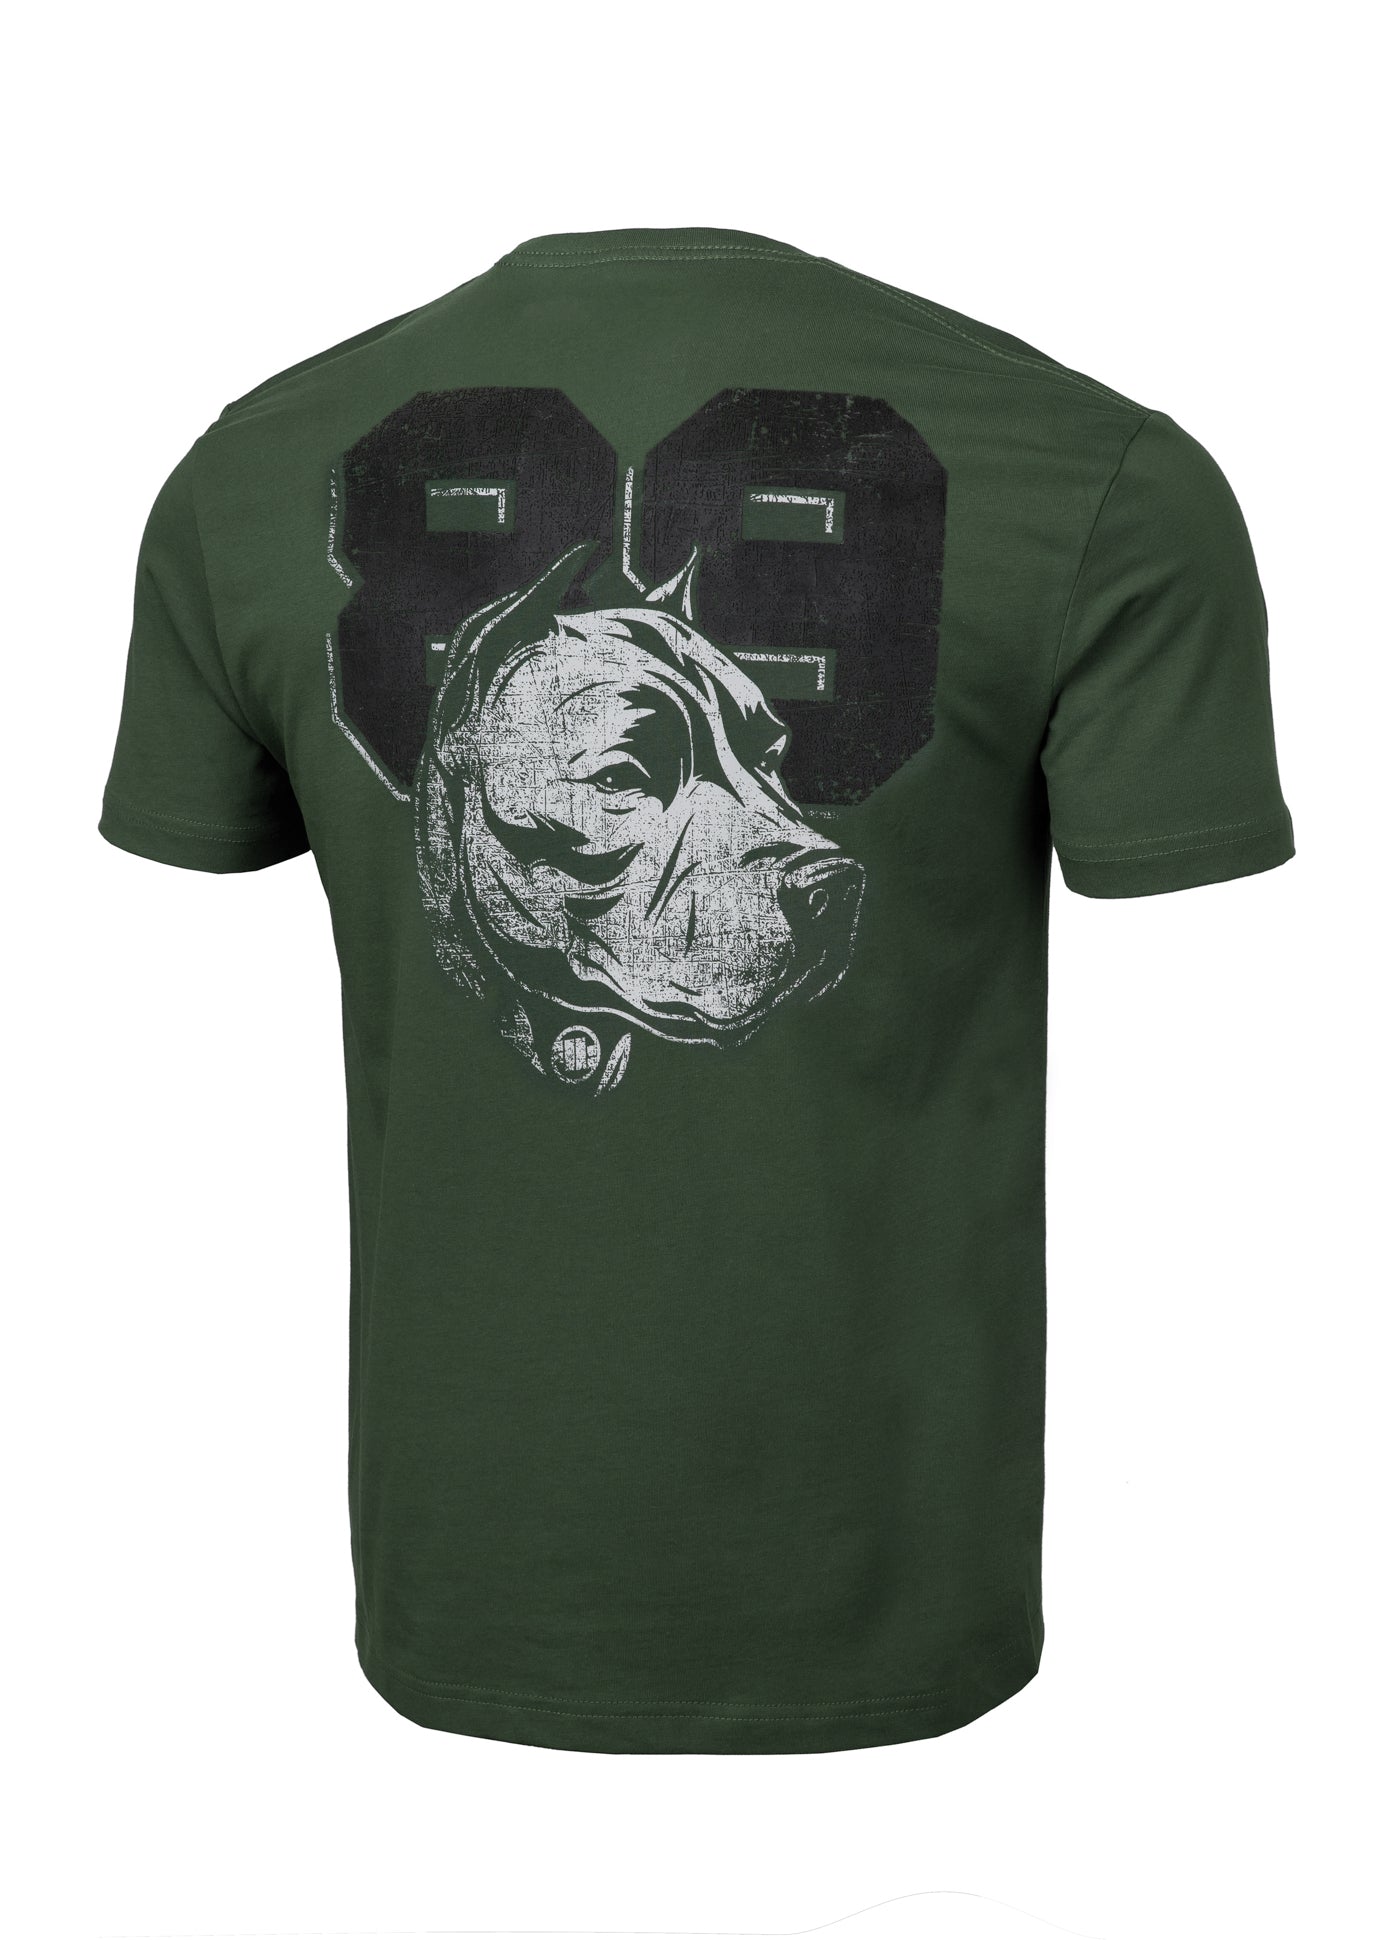 DOG 89 Green T-shirt